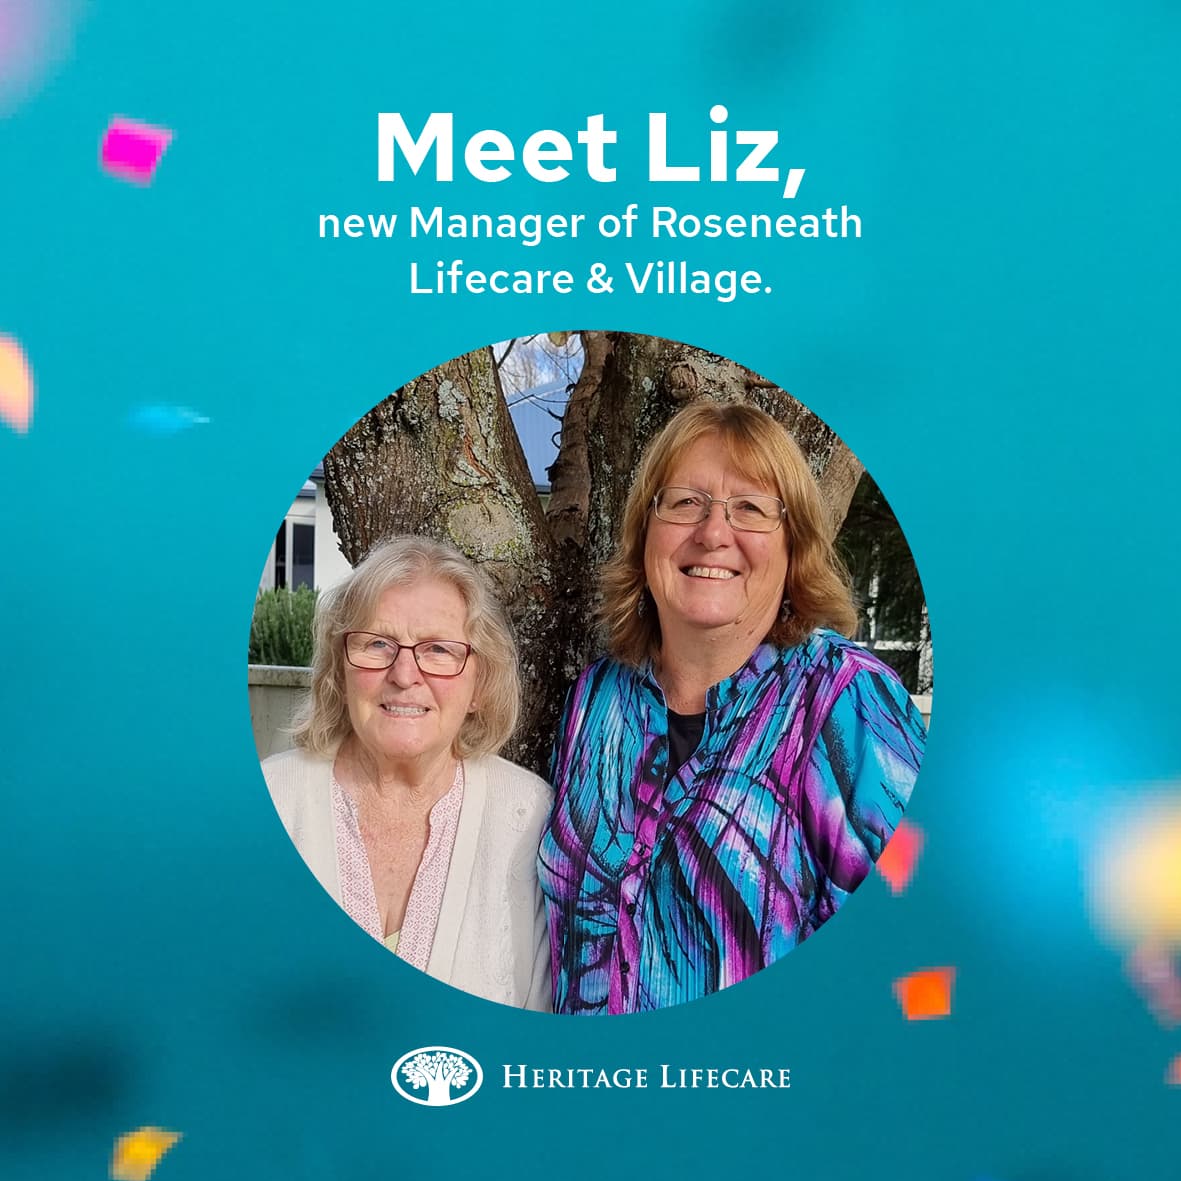 Liz Mather, Manager of Roseneath Lifecare & Village